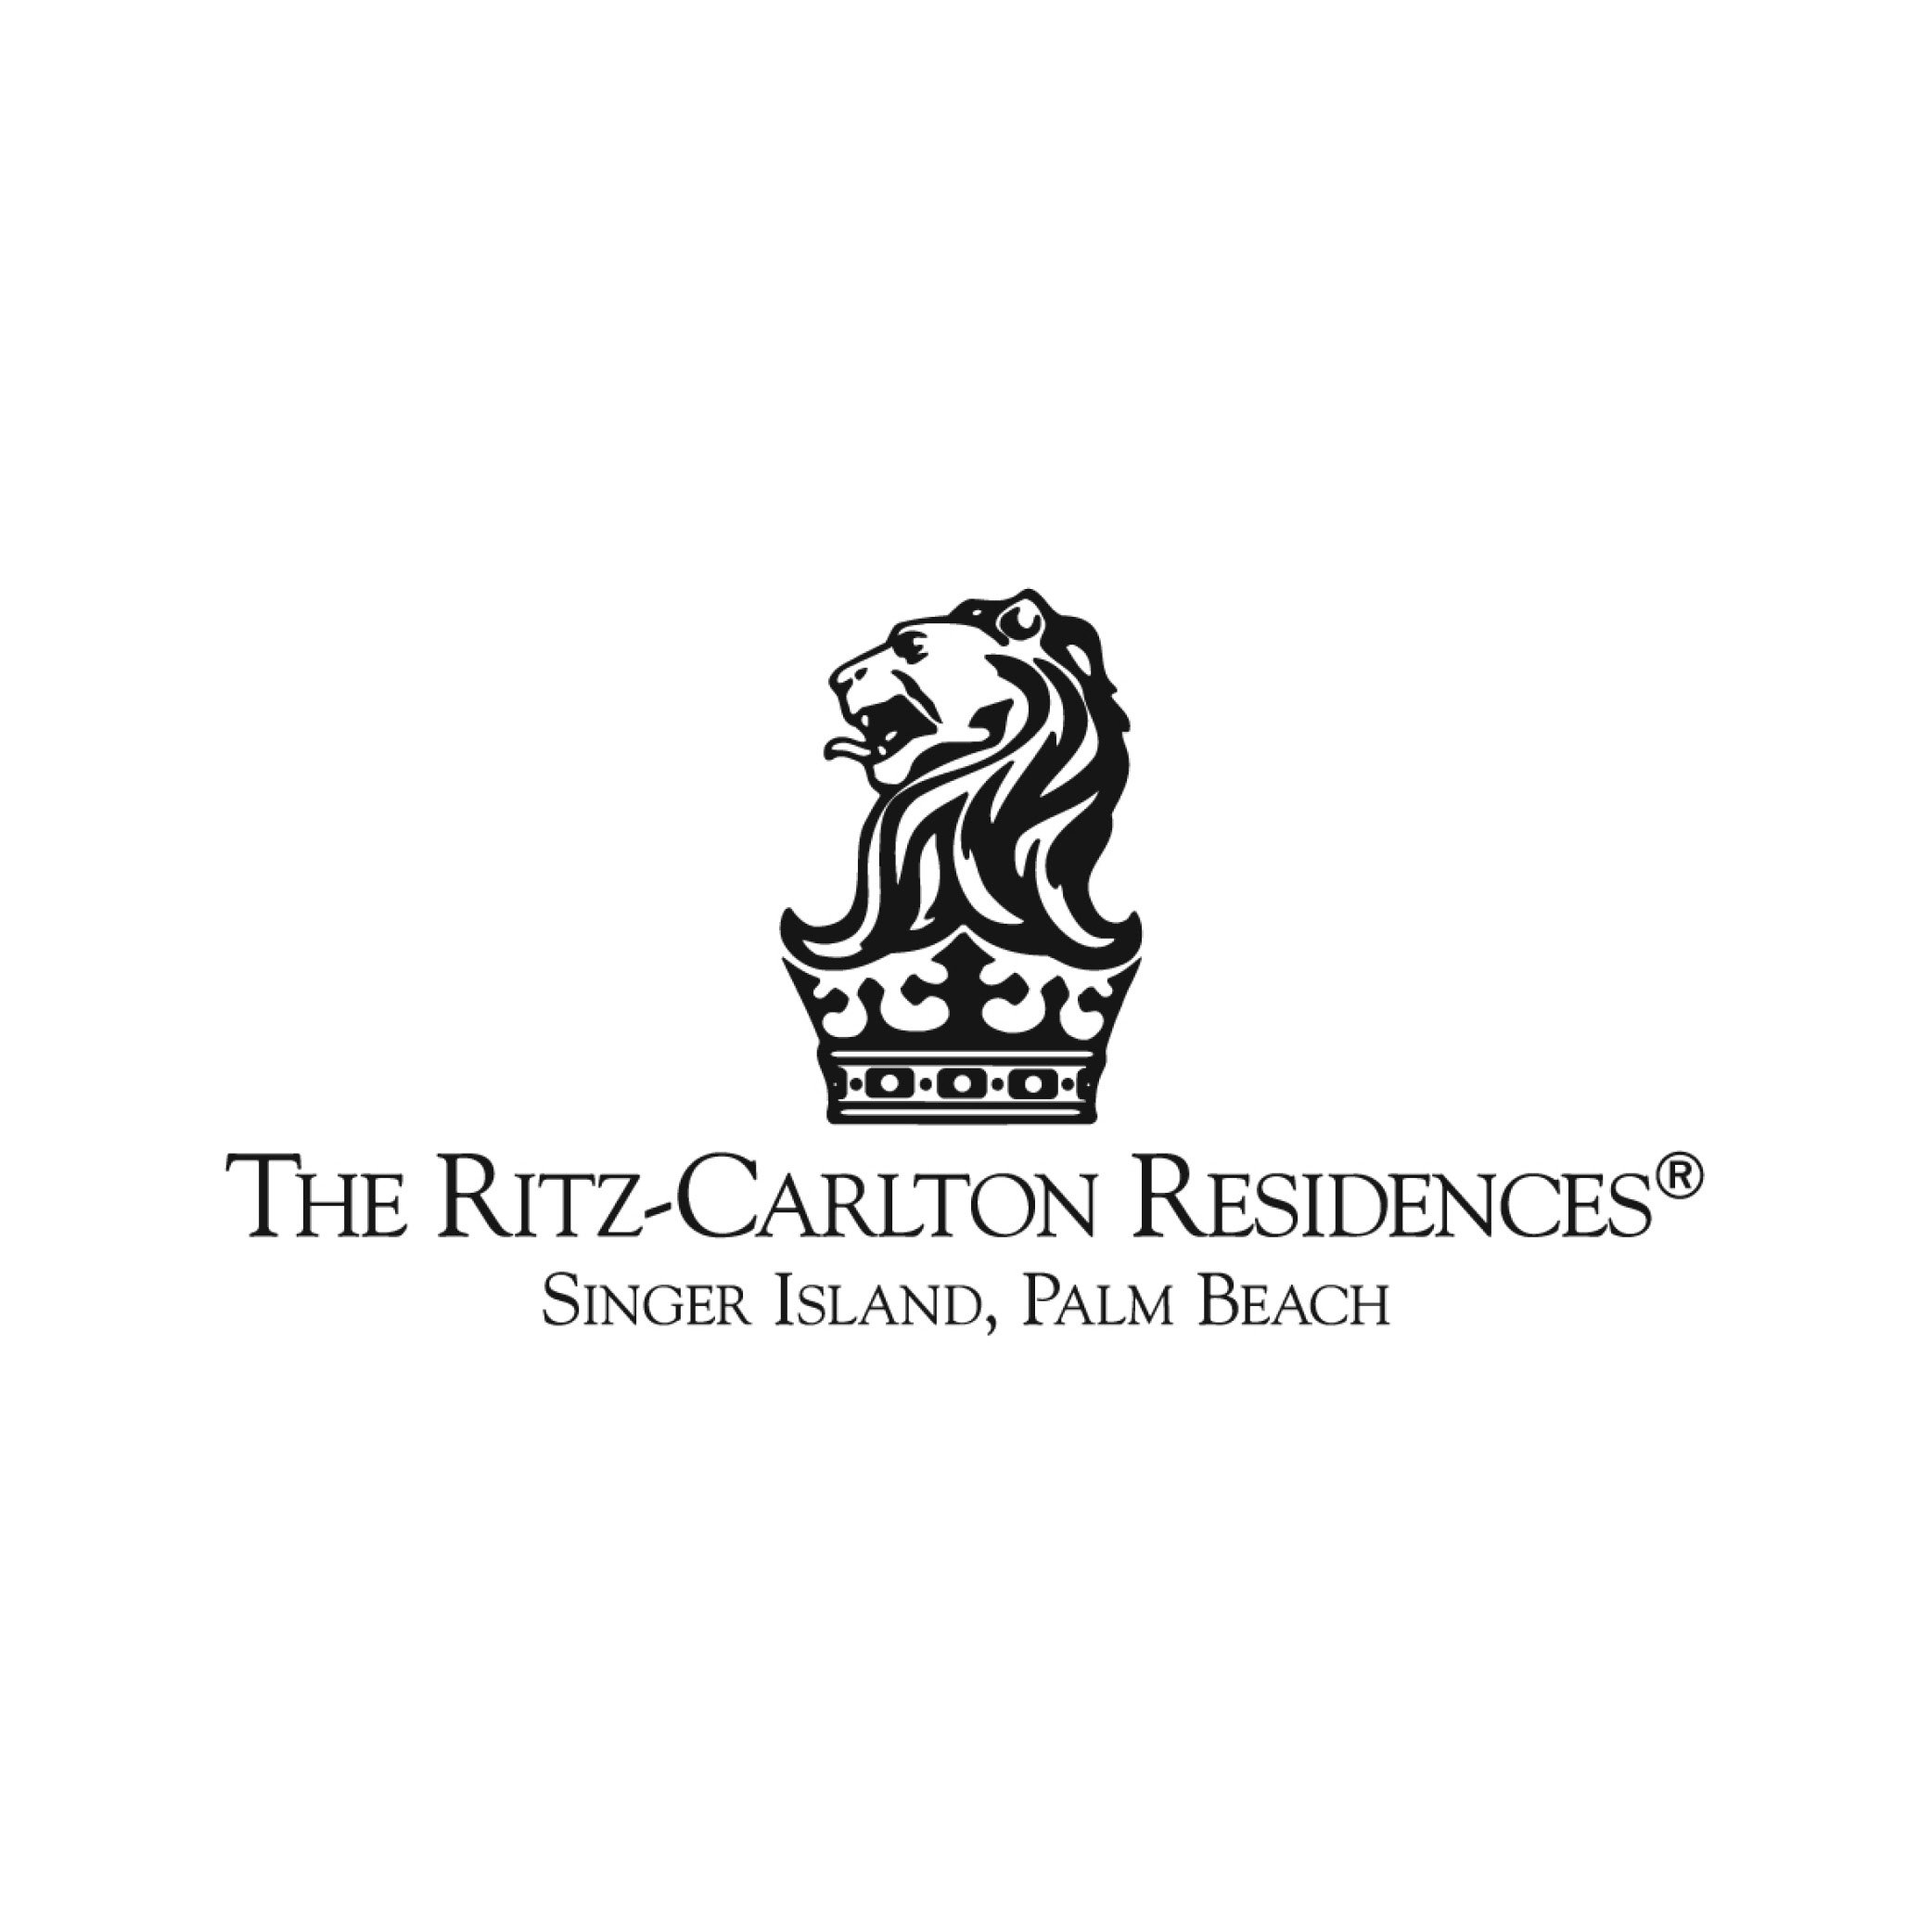 The Ritz-Carlton Residences Singer Island, Palm Beach